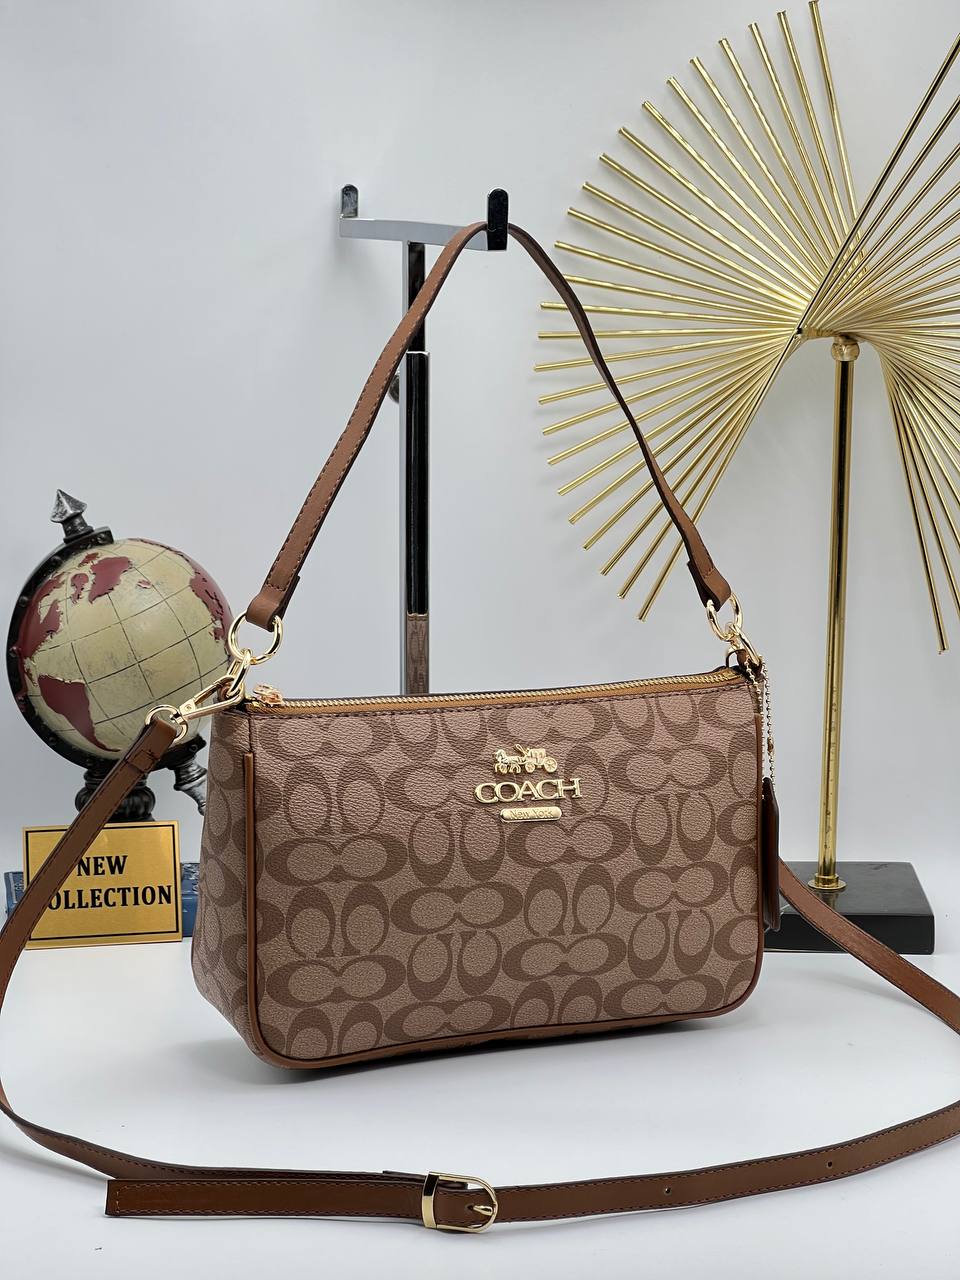 brown handbags, brown handbag, brown leather handbag, handbag brown, brown leather handbags